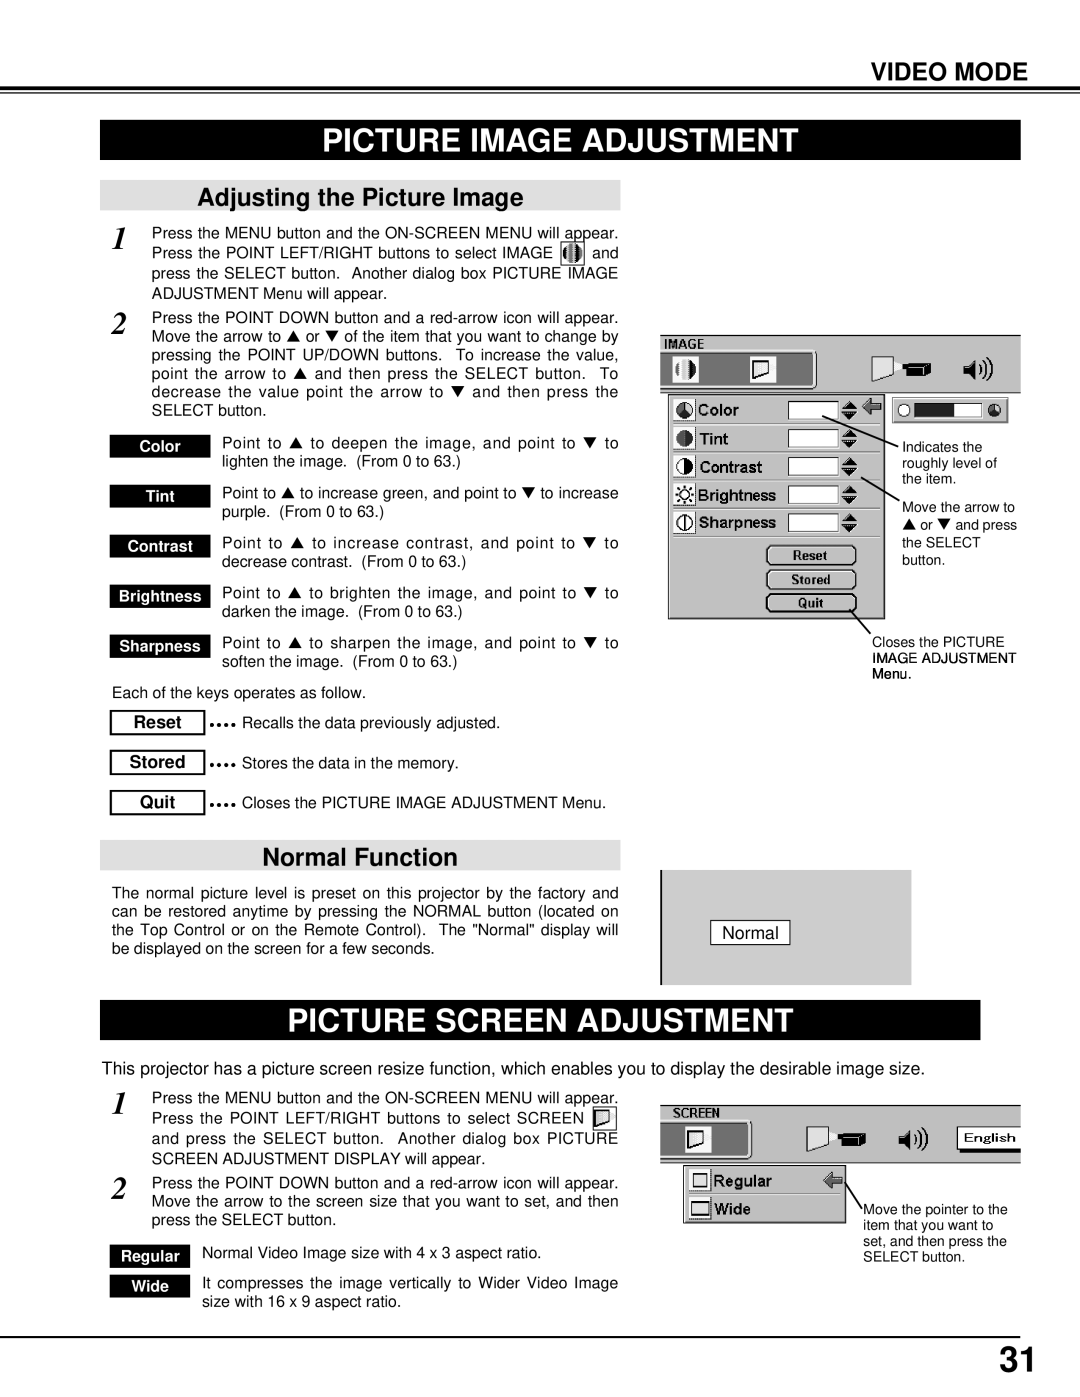 BOXLIGHT CP-14t manual Video Mode, Adjusting the Picture Image, Picture Image Adjustment, Picture Screen Adjustment 